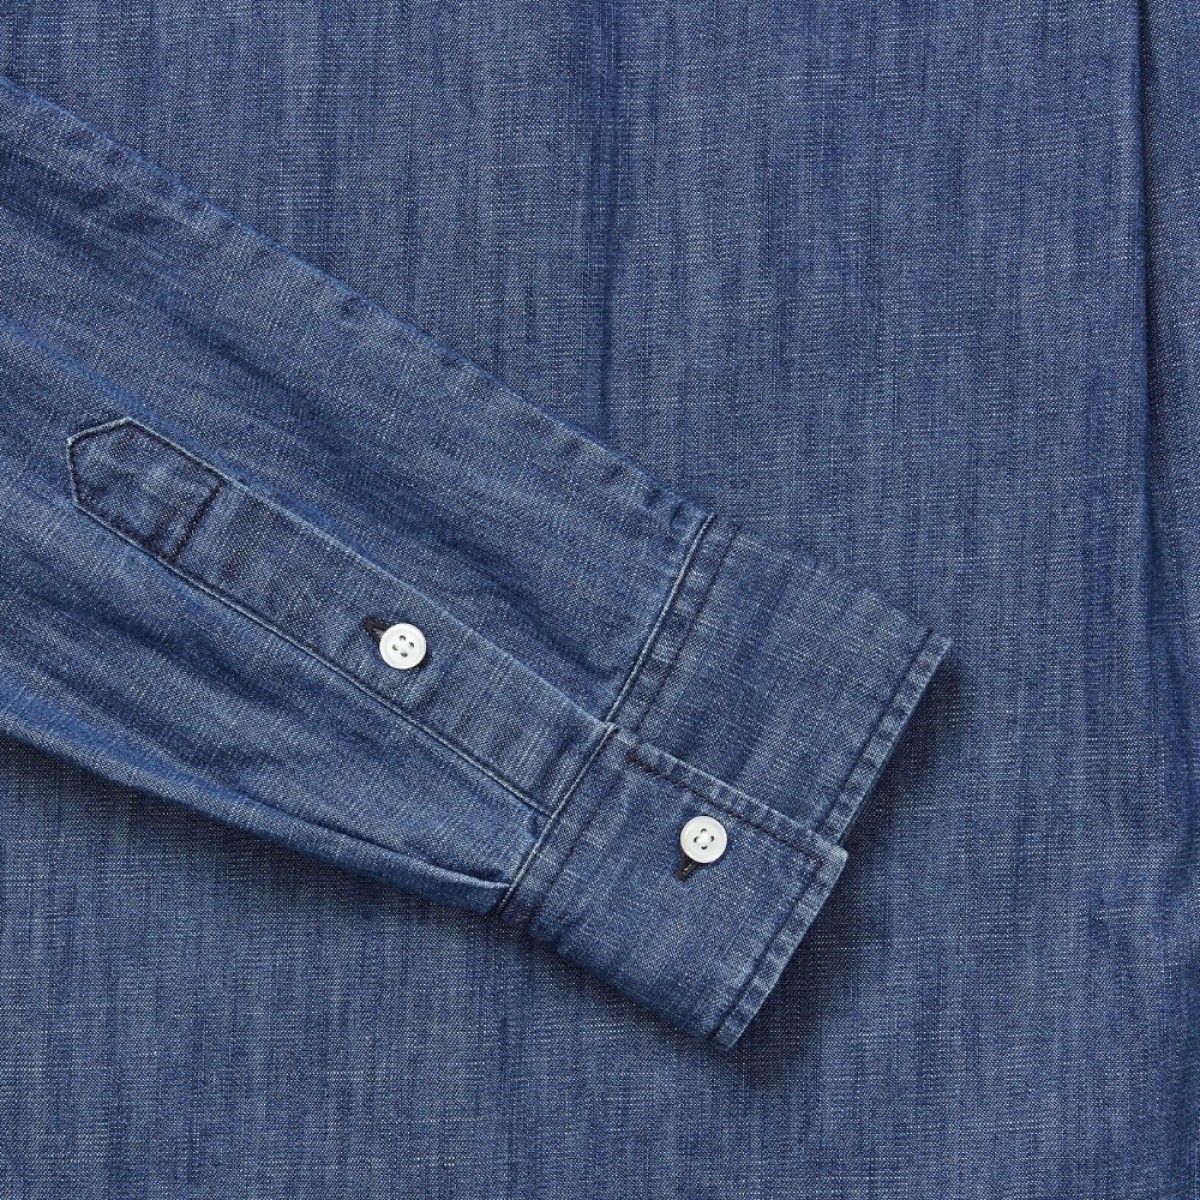 lynette shirt denim - blue jeans - ærme